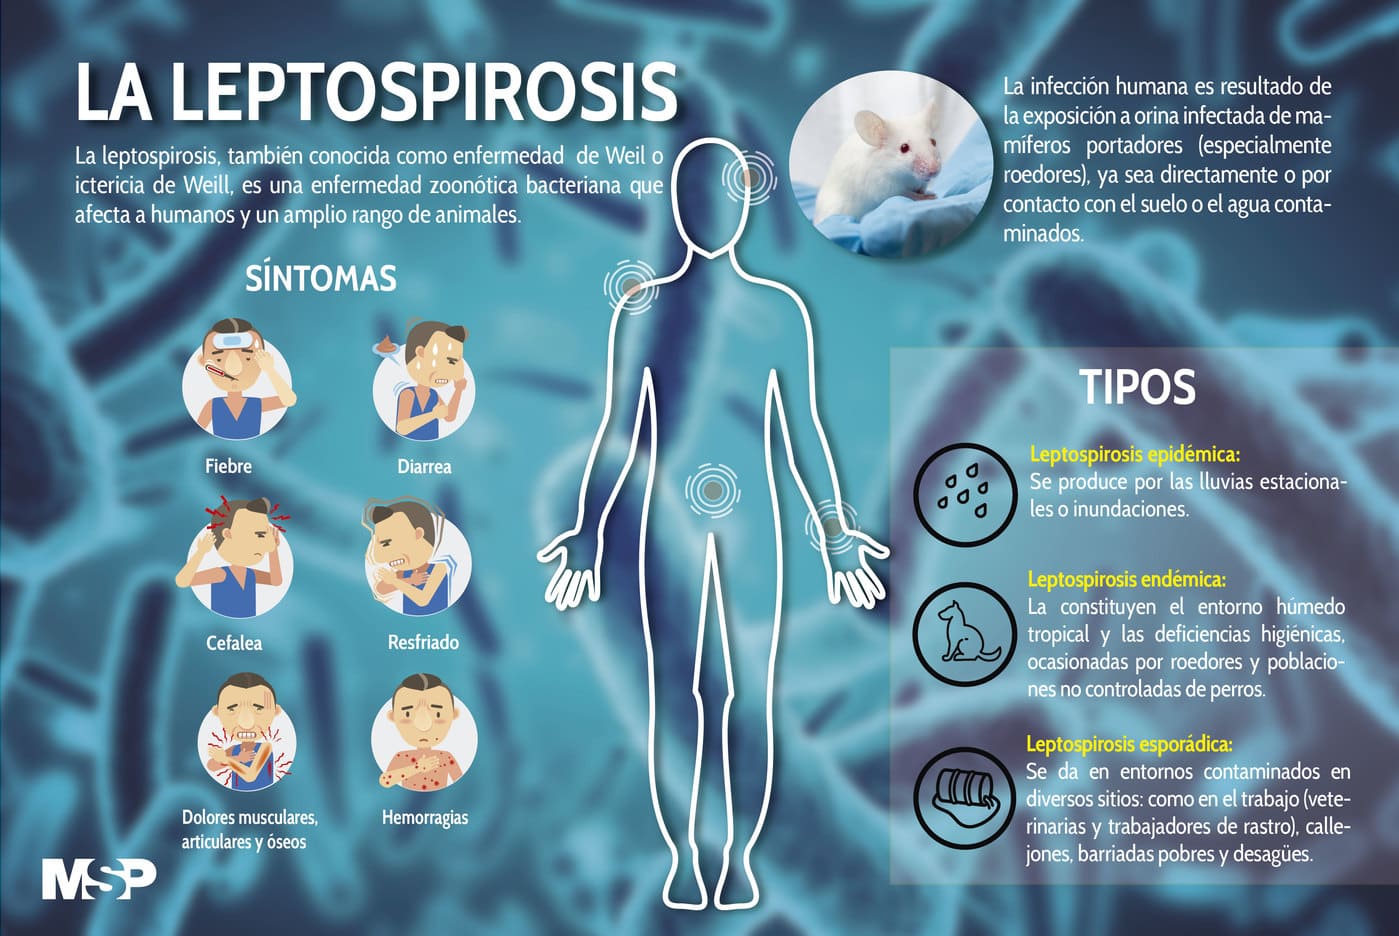 La Leptospirosis